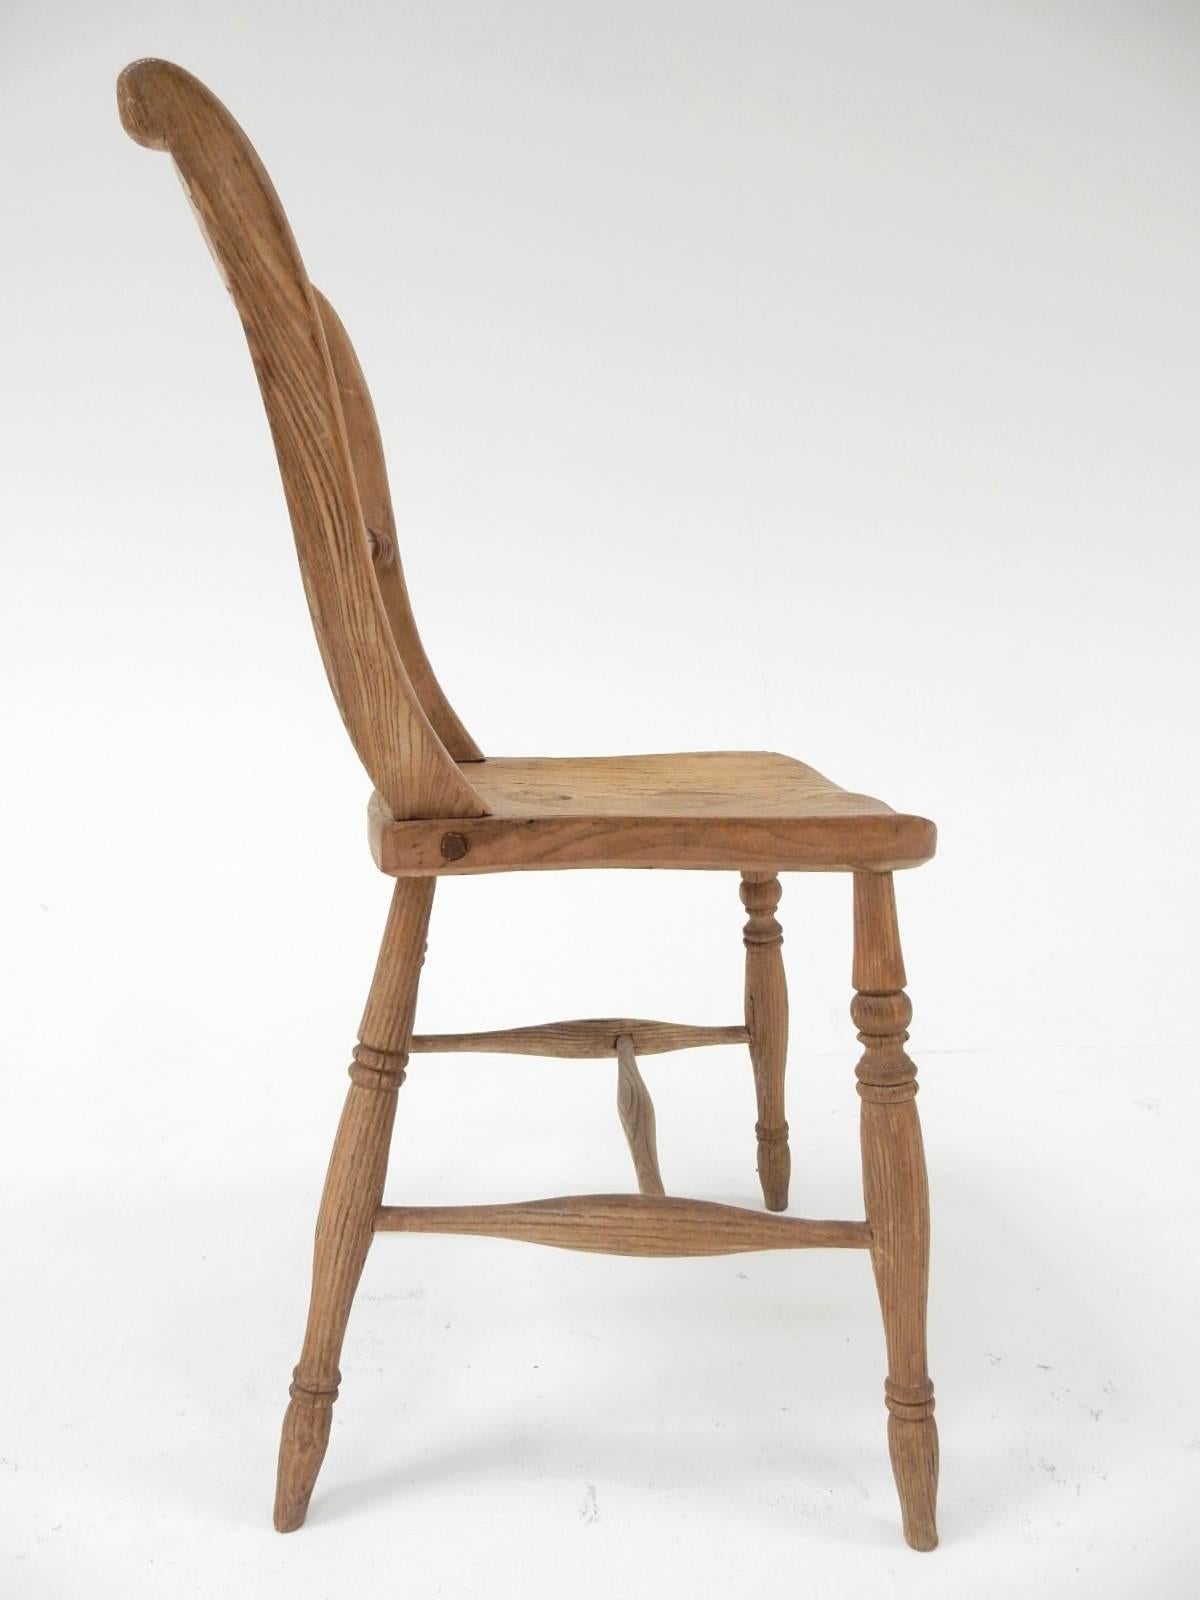 Victoria Regina Era Rustic English Original Farm Chairs In Good Condition For Sale In Las Vegas, NV